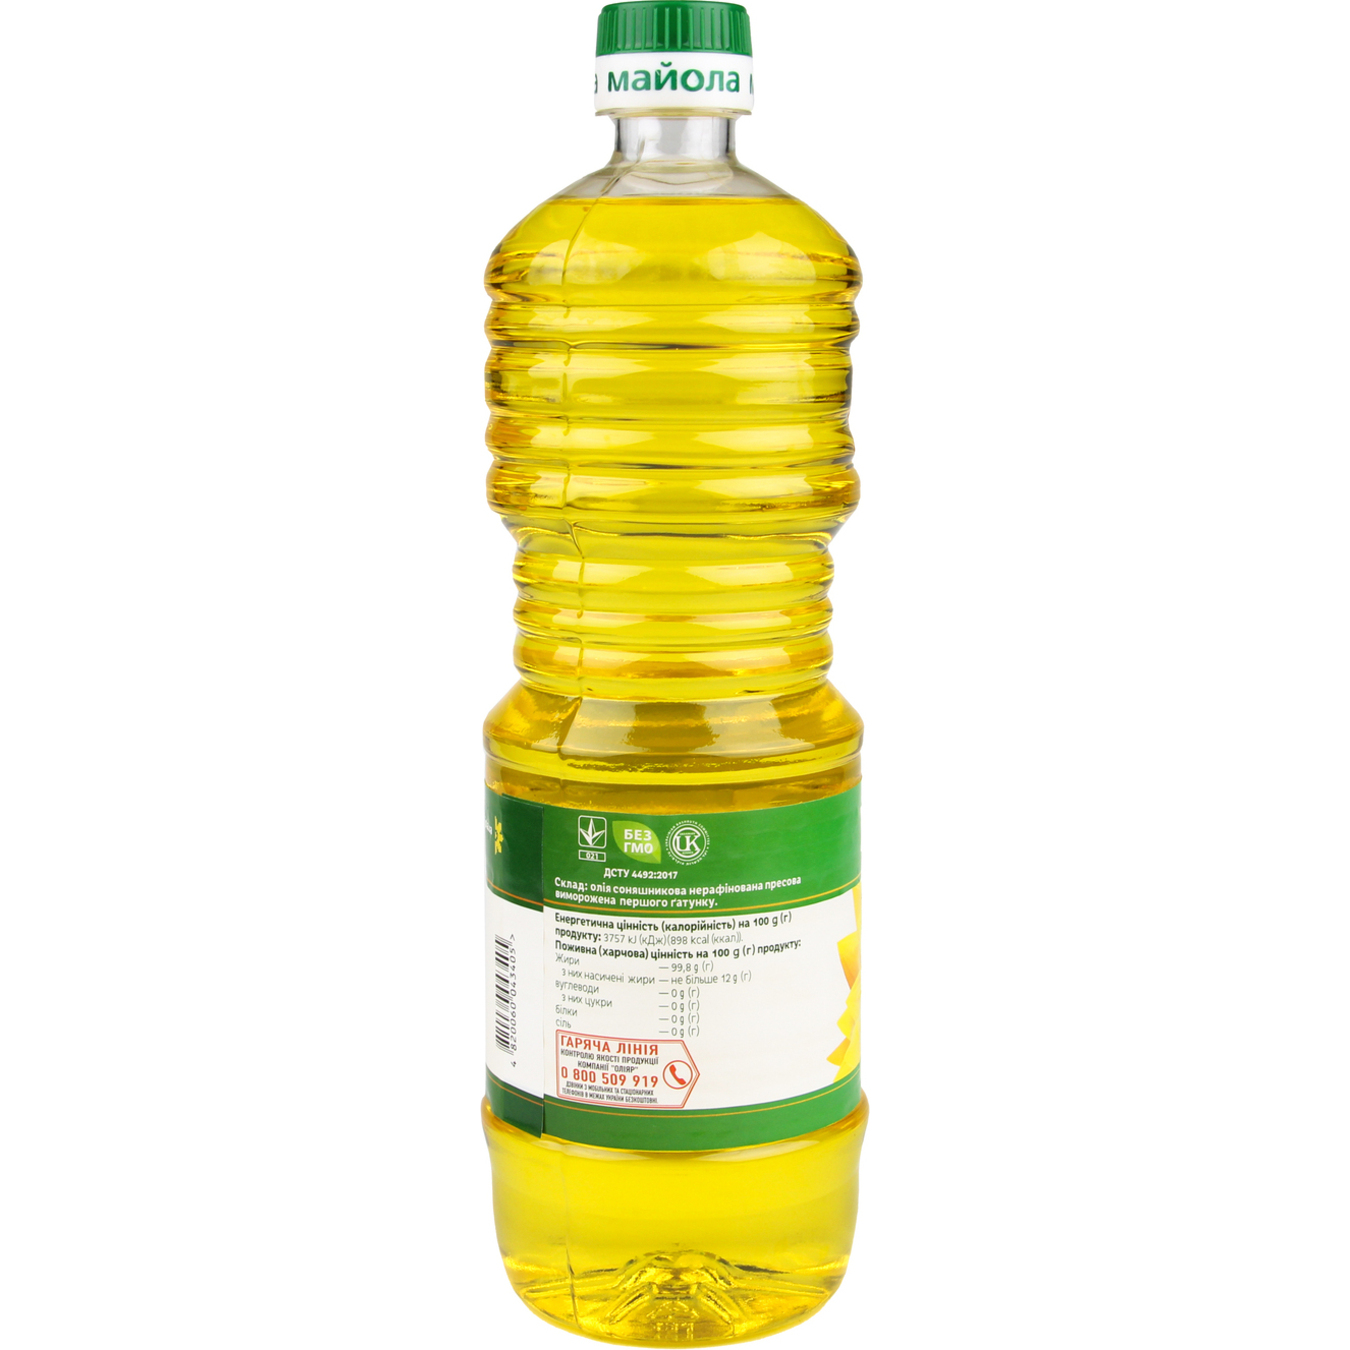 Mayola Unrefined First Grade Sunflower Oil 850ml 2